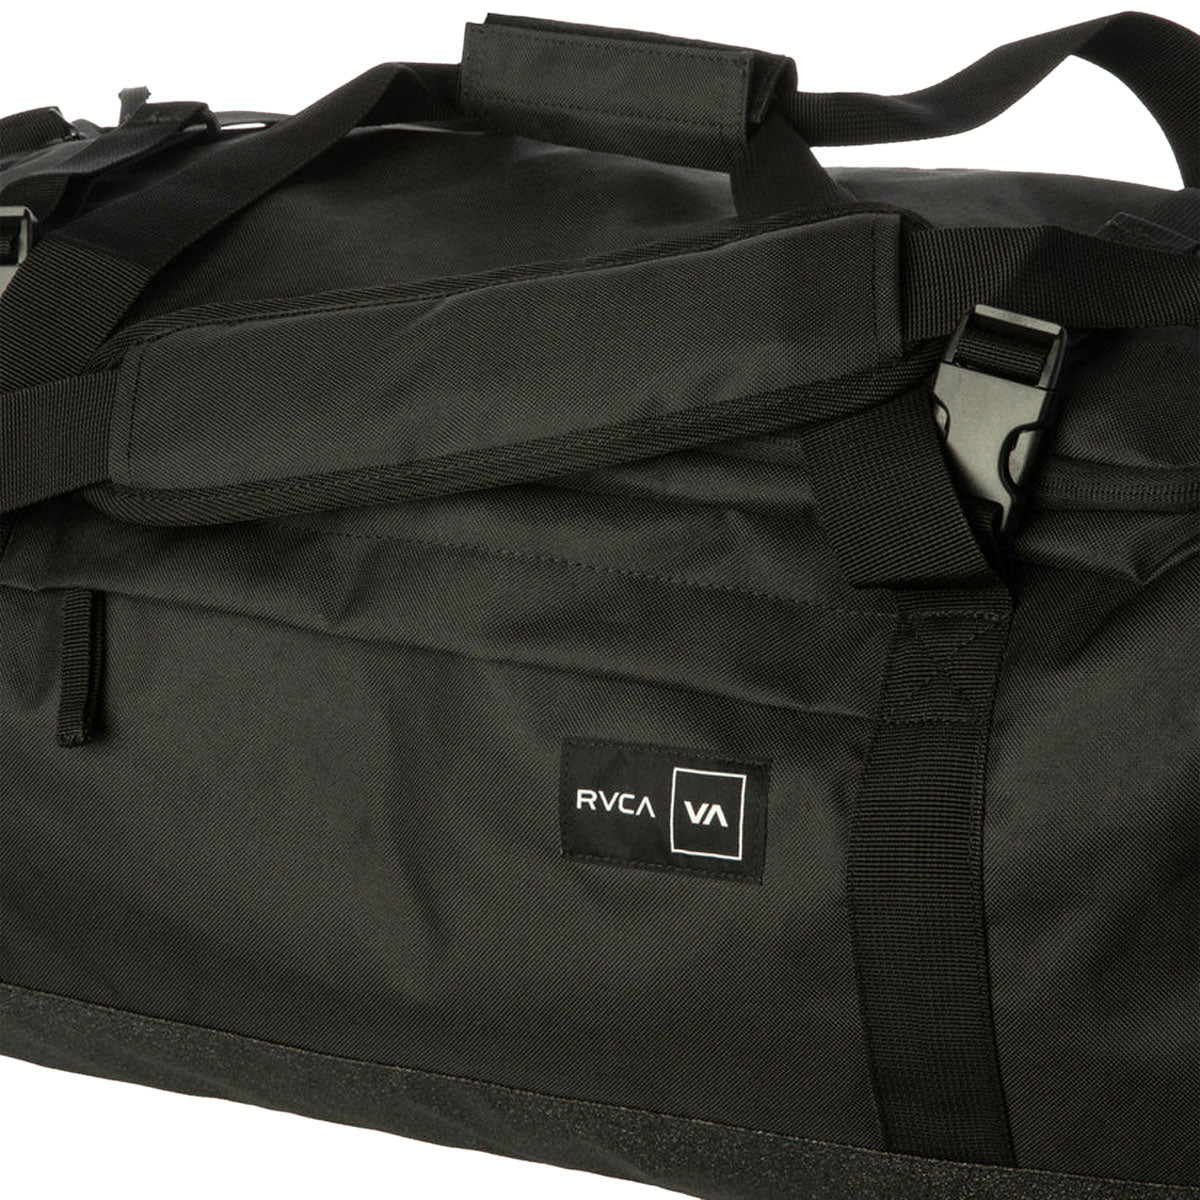 RVCA Skate IV Duffle Bag - New Black image 4